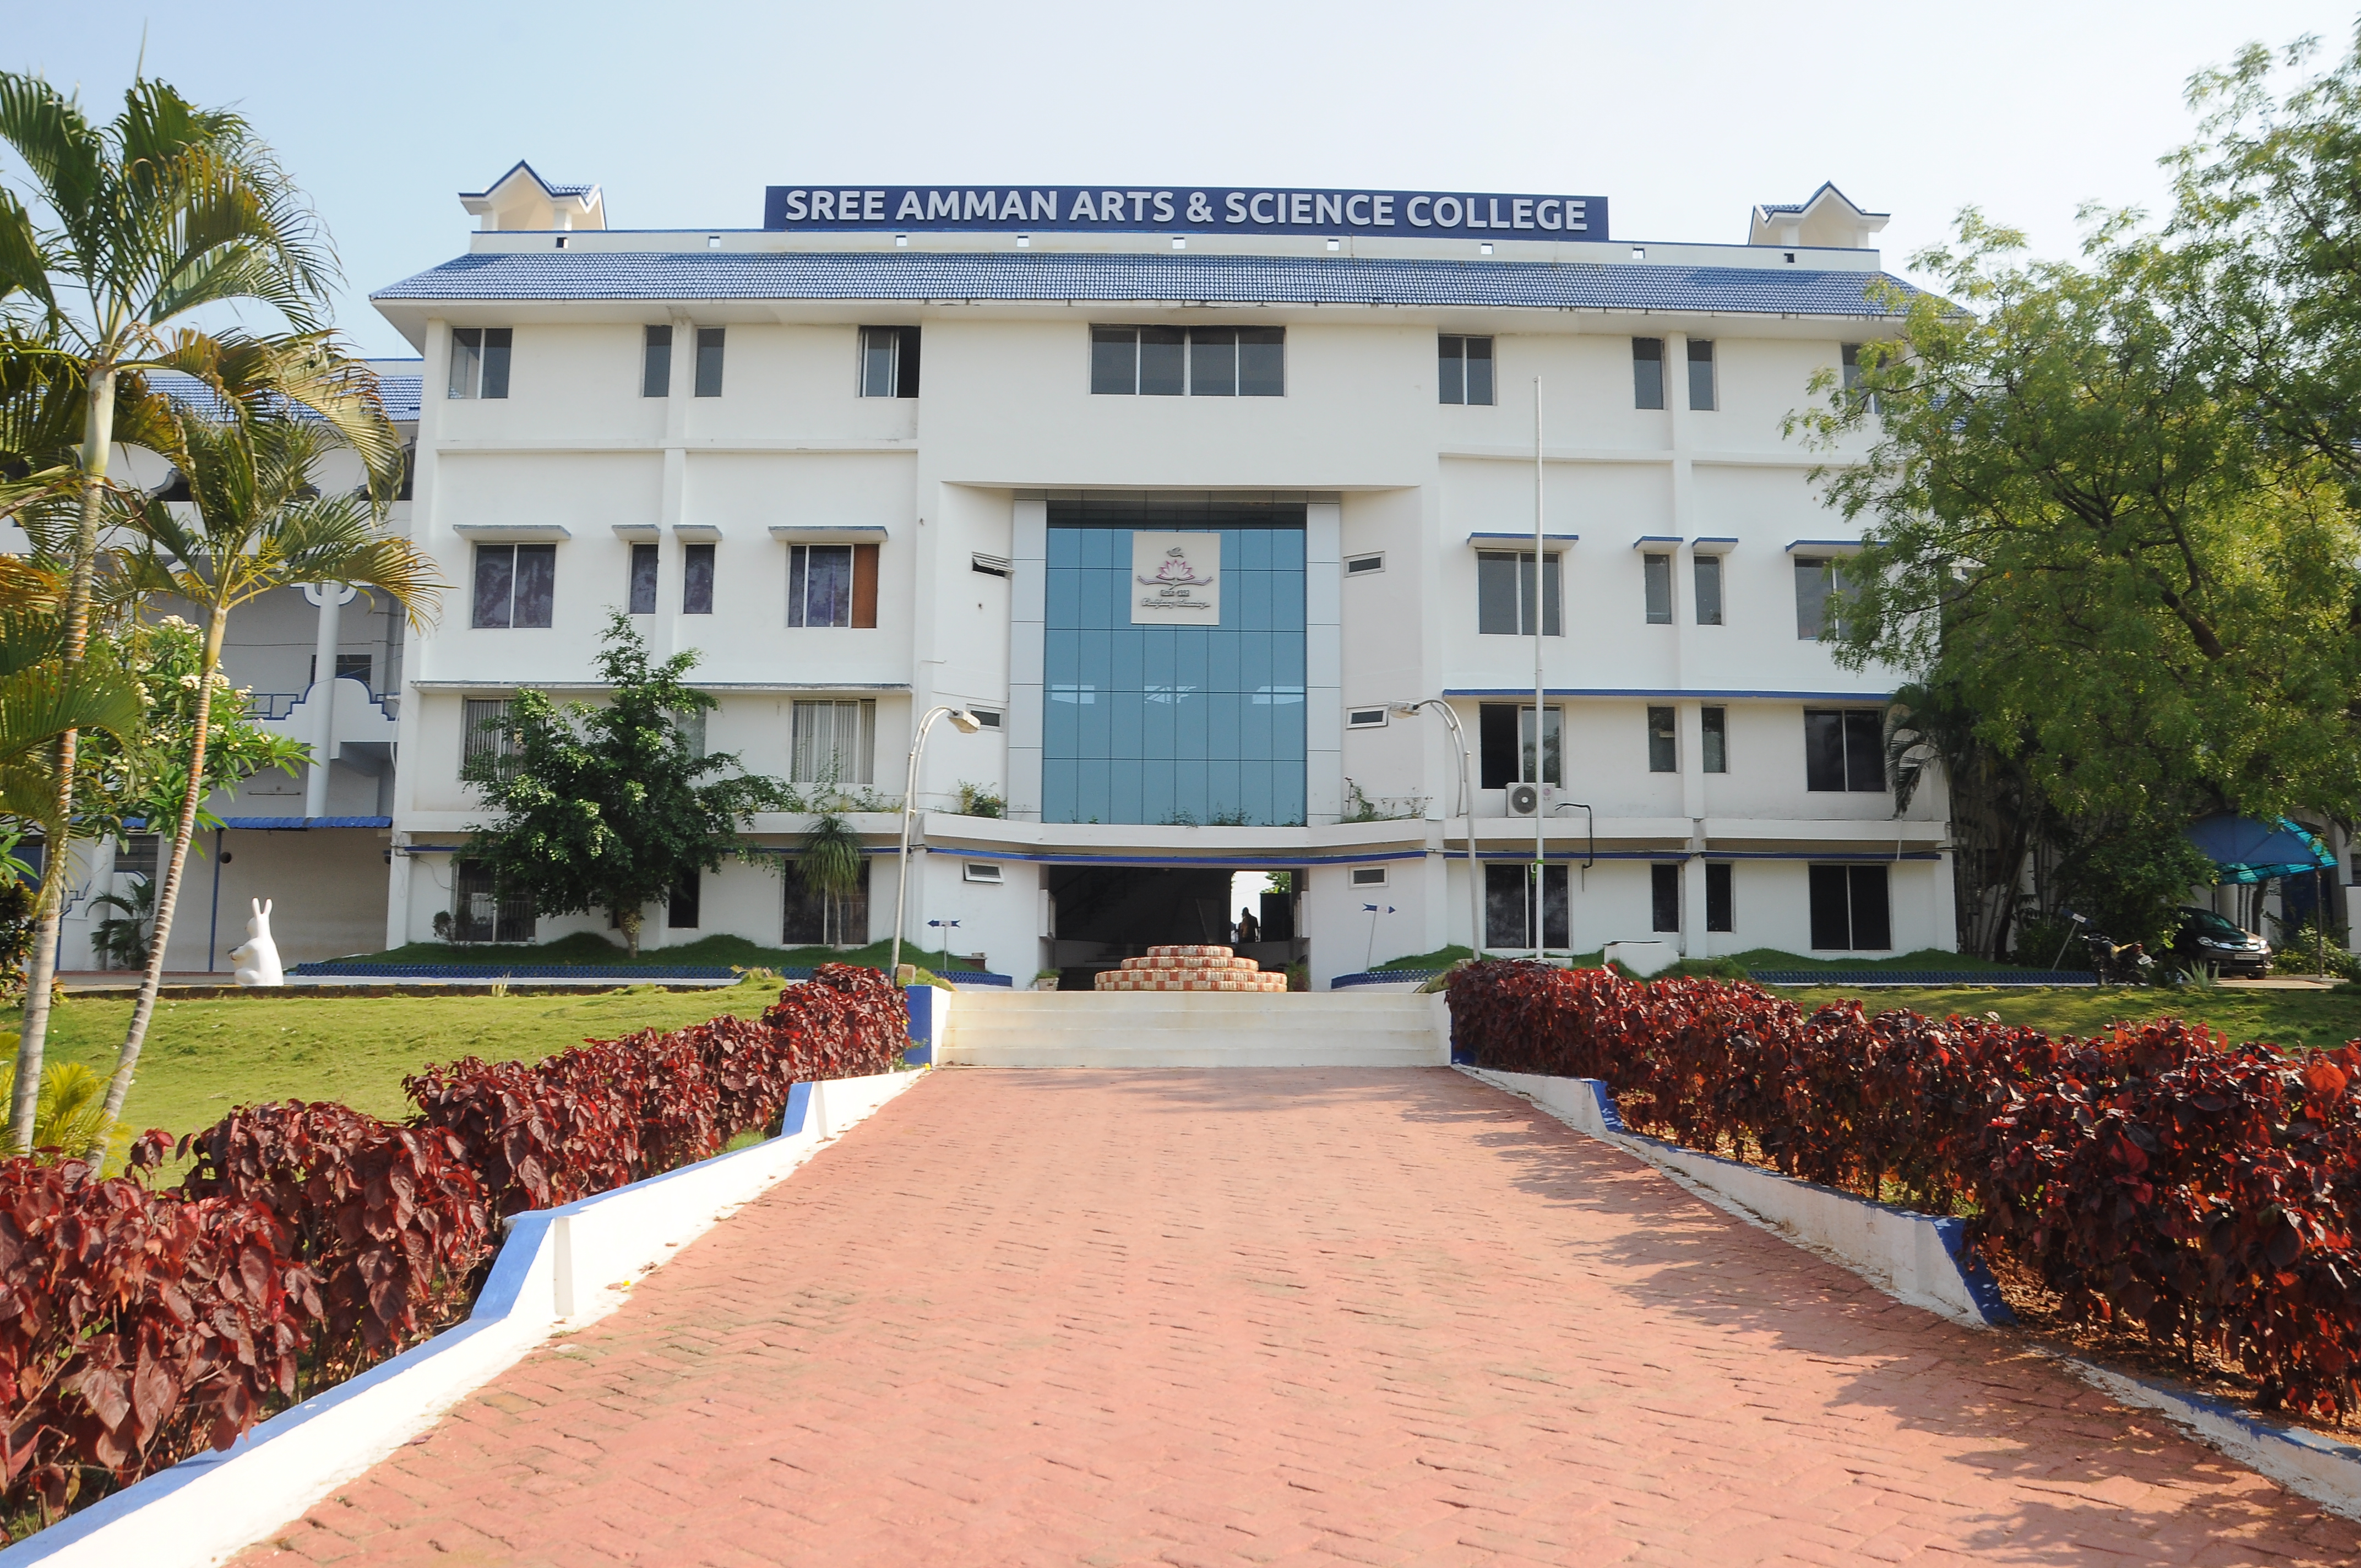 Sree amman arts & science college